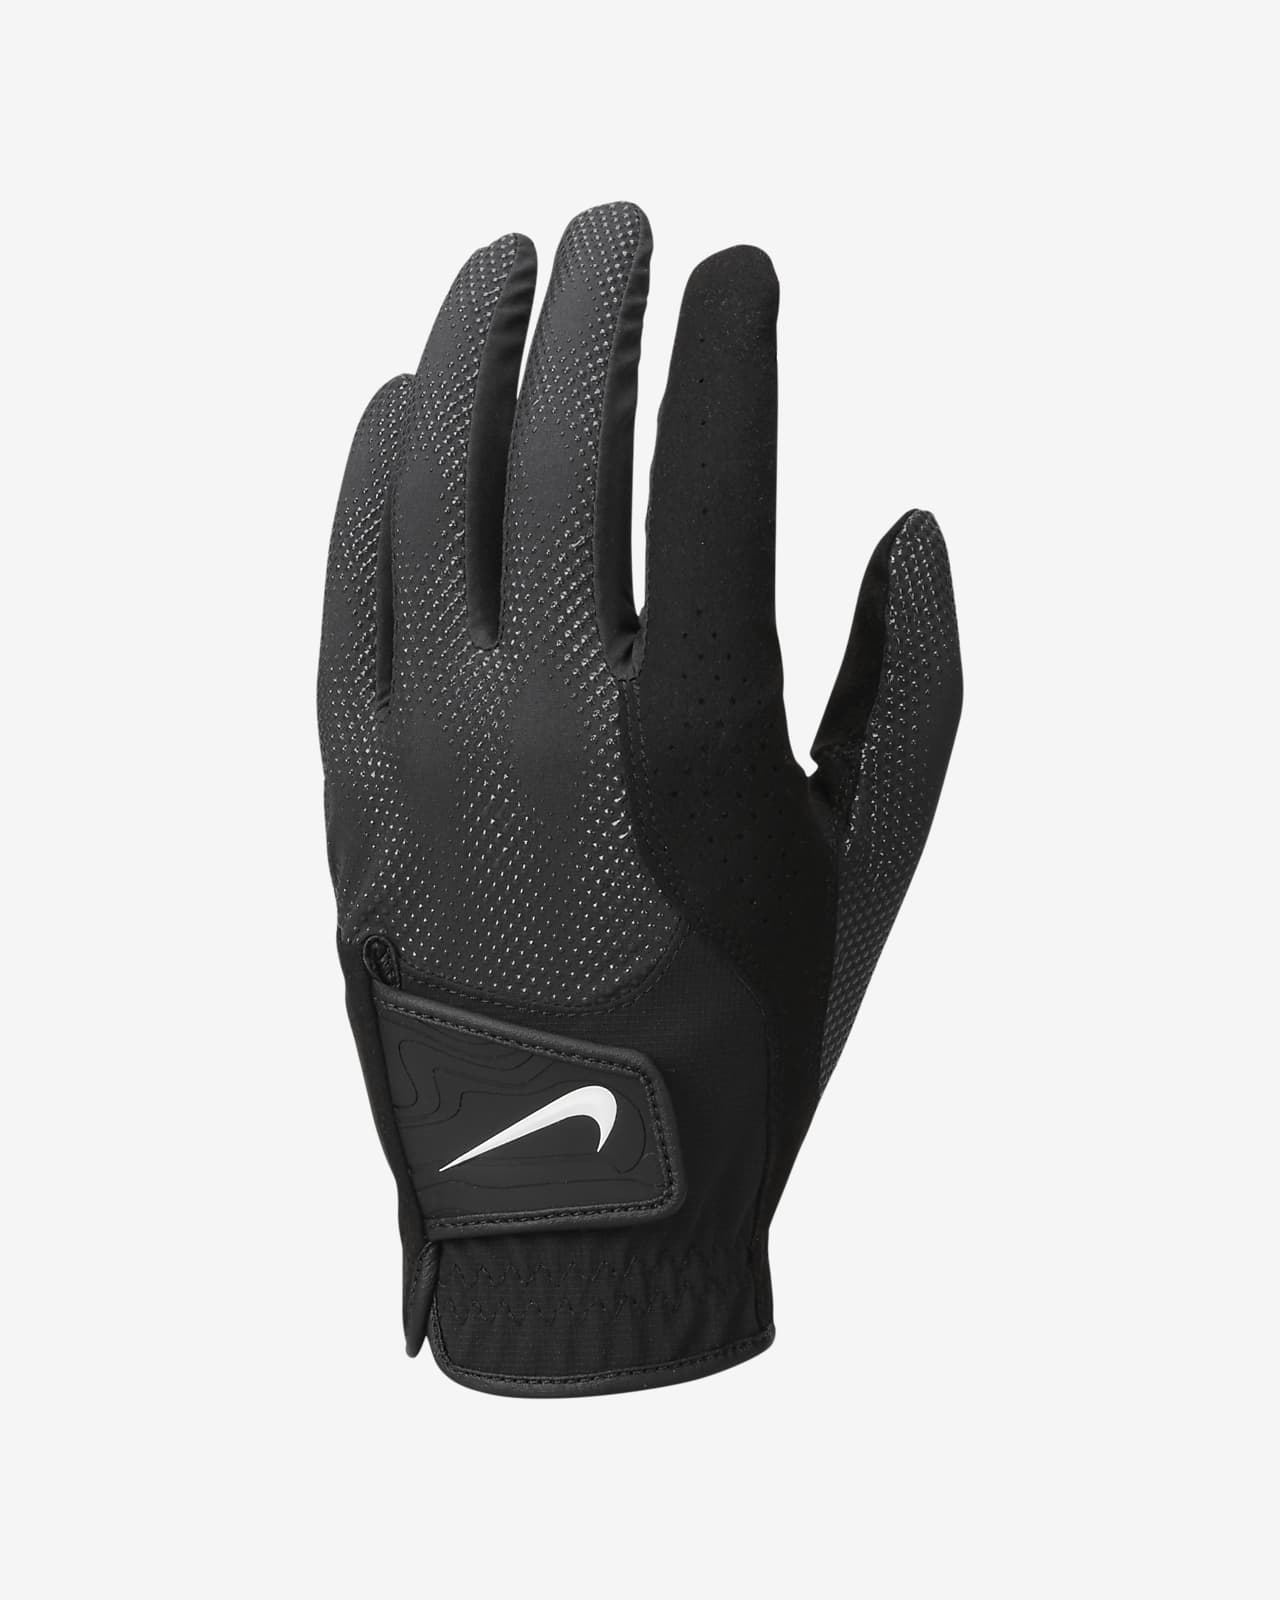 Nike Storm-FIT Golf Gloves